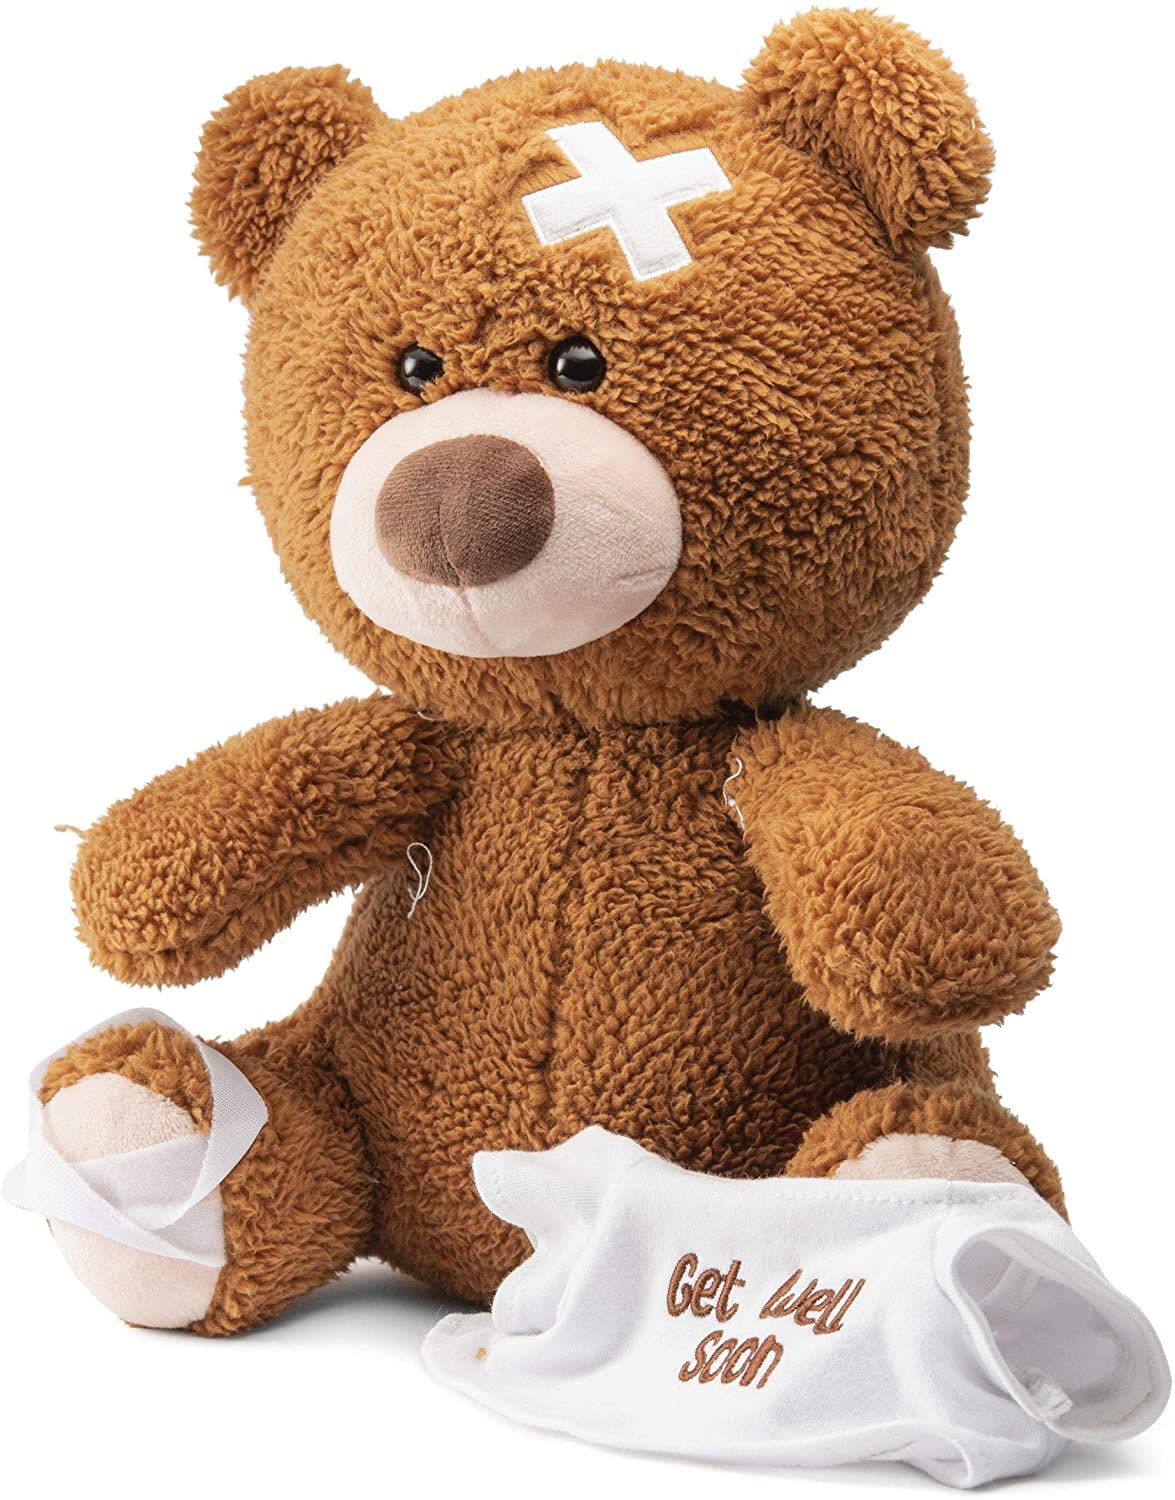 PREXTEX 12-Inch Get Well Soon Plush Bear - Soft Stuffed Teddy Bear - Get Well Soon Gifts for Kids Stuffed Animals - Get Well Soon Stuffed Toy - Get Well Soon Teddy Bear Plush - Get Well Gift